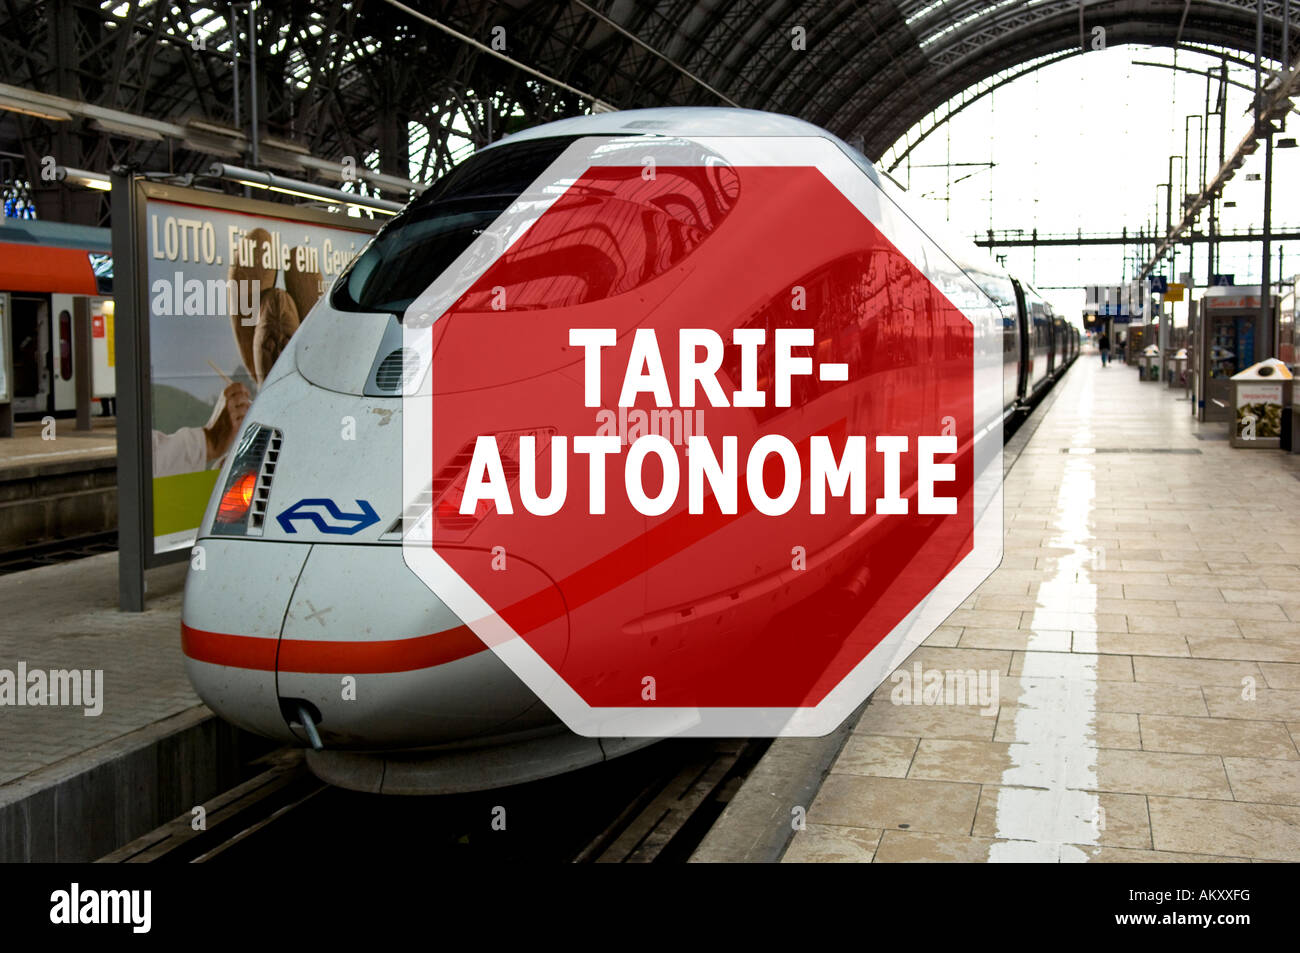 Receive or cut tariff autonomy at the Deutsche Bahn Stock Photo